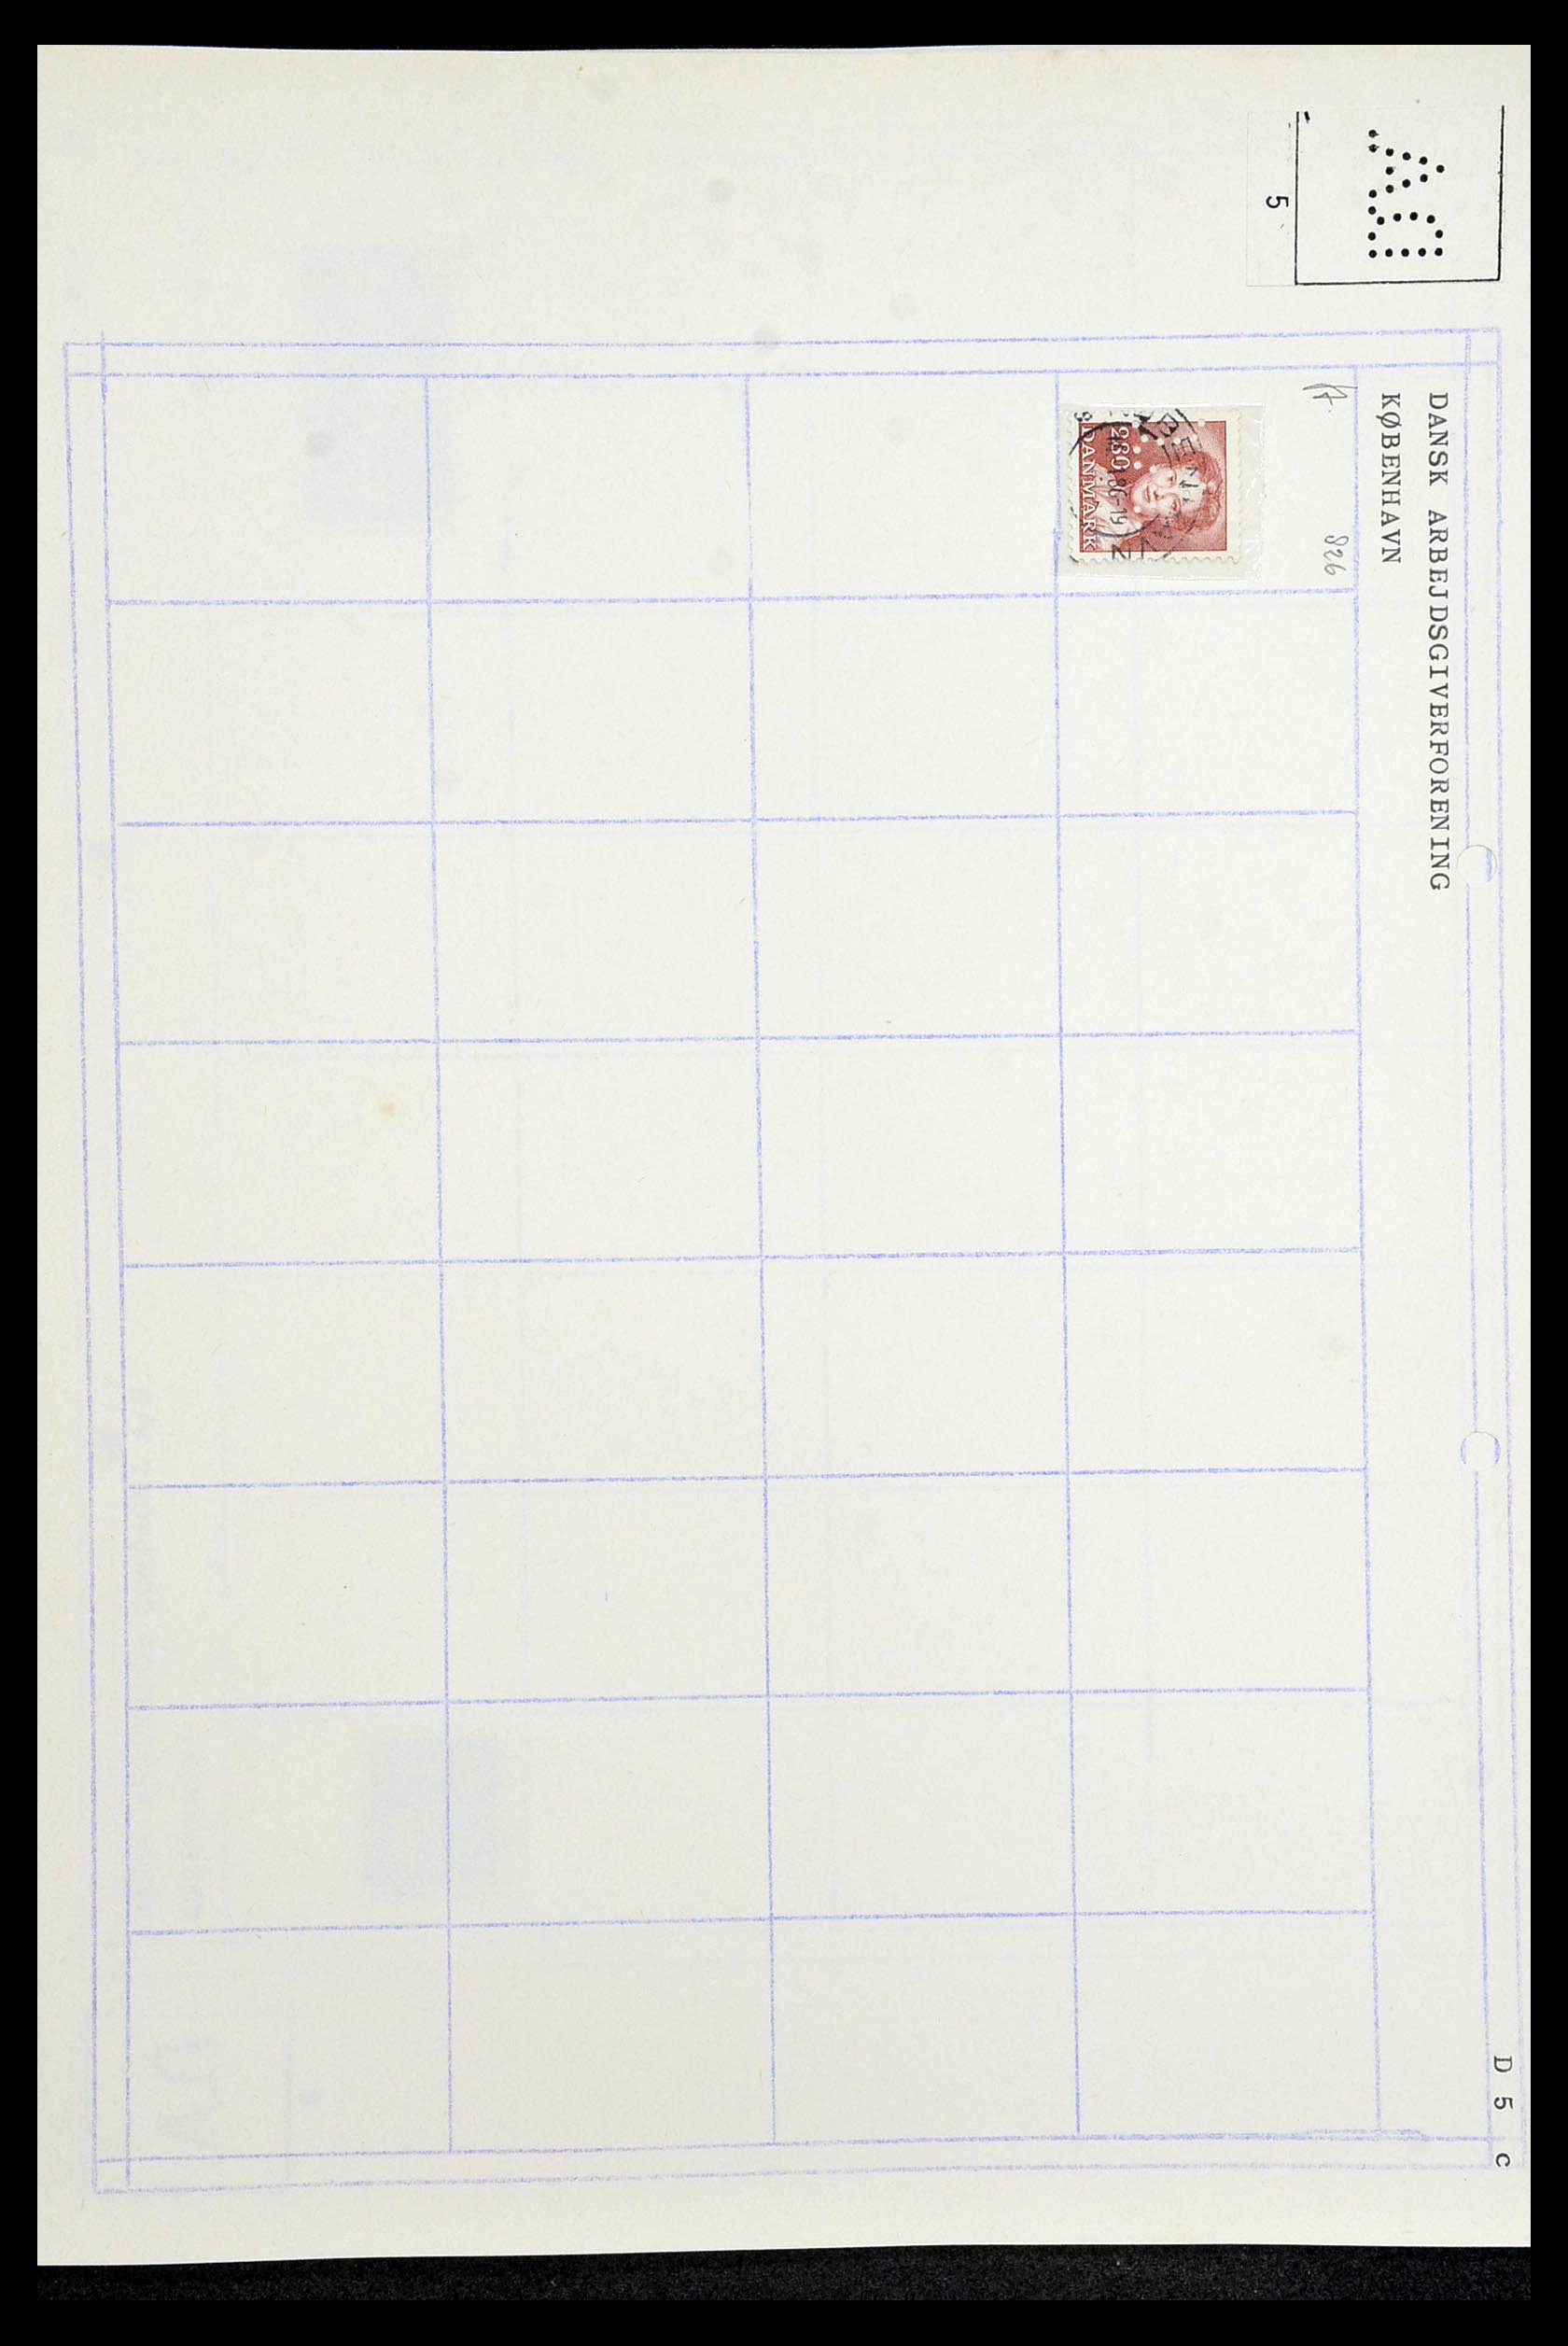 34415 053 - Stamp Collection 34415 Denmark perfins 1875-1980.